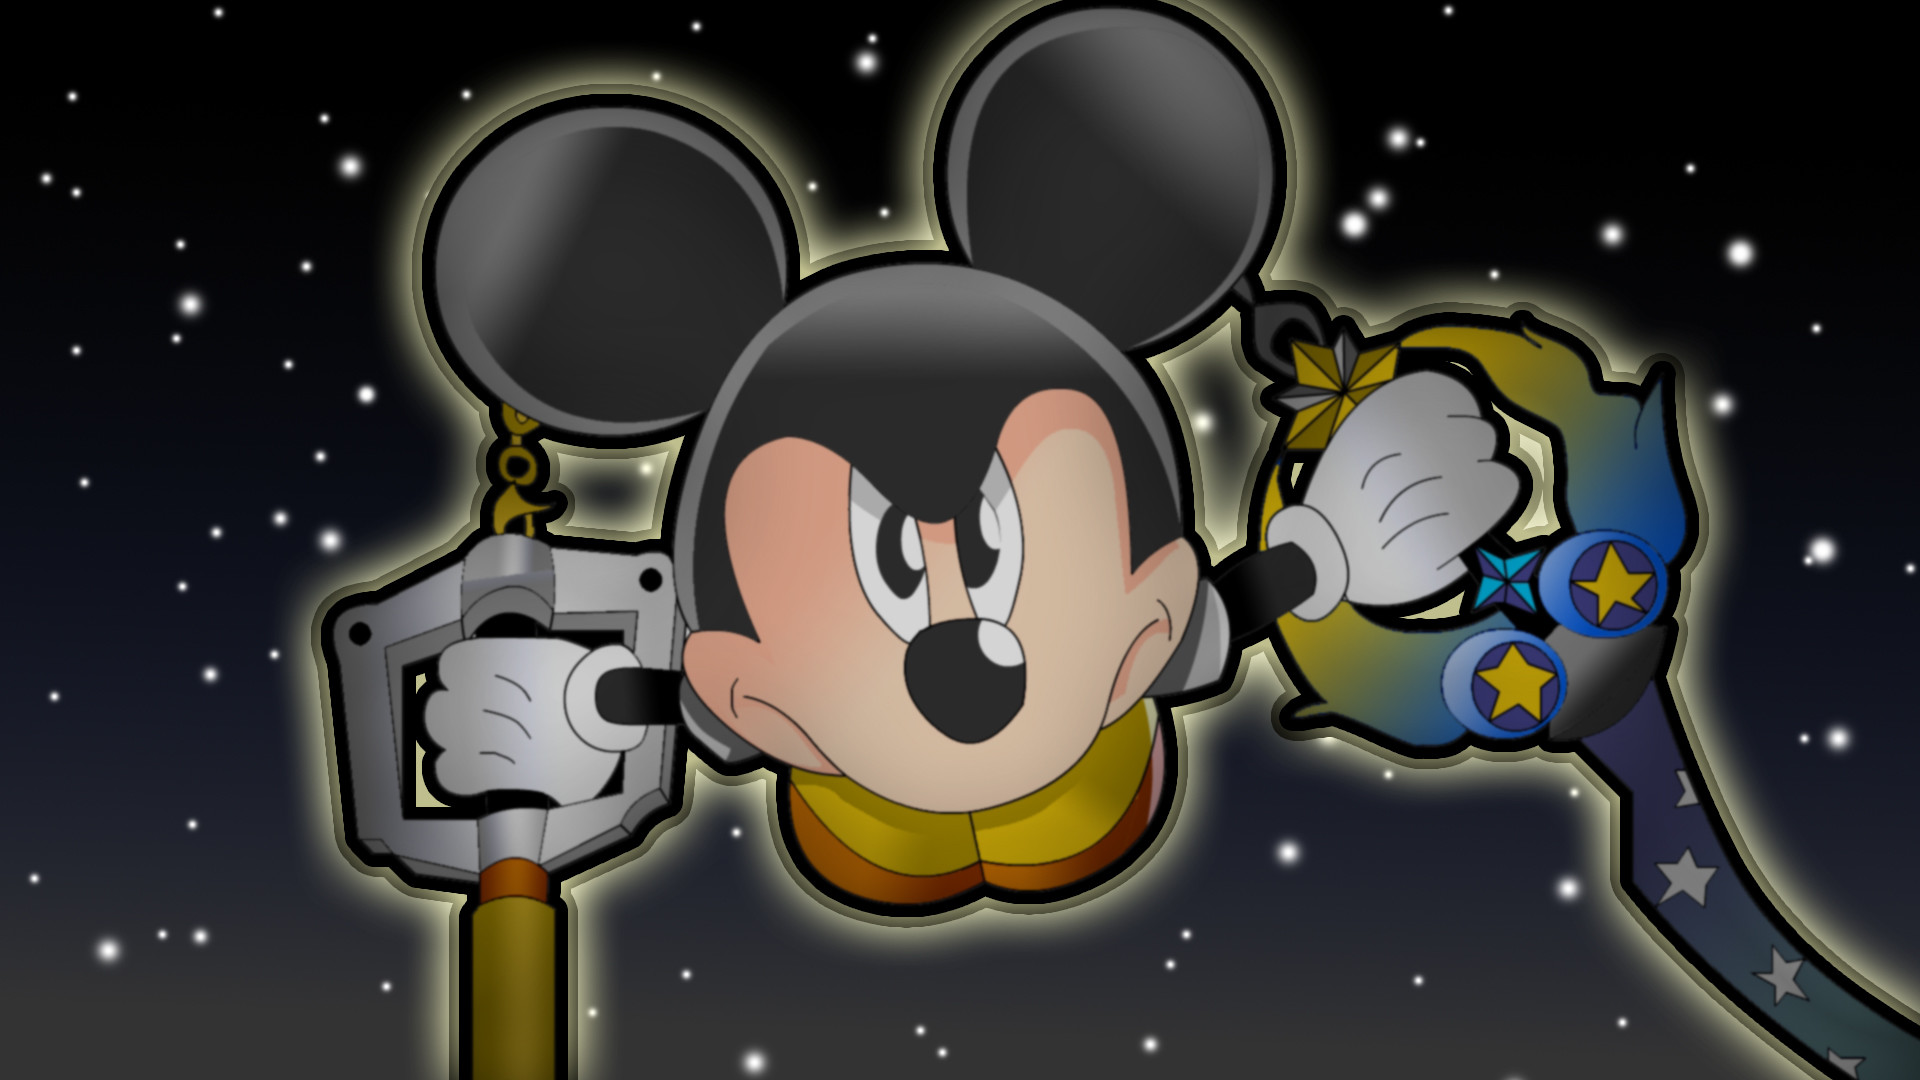 King Mickey Double Keyblade by Msamsseme1 on DeviantArt